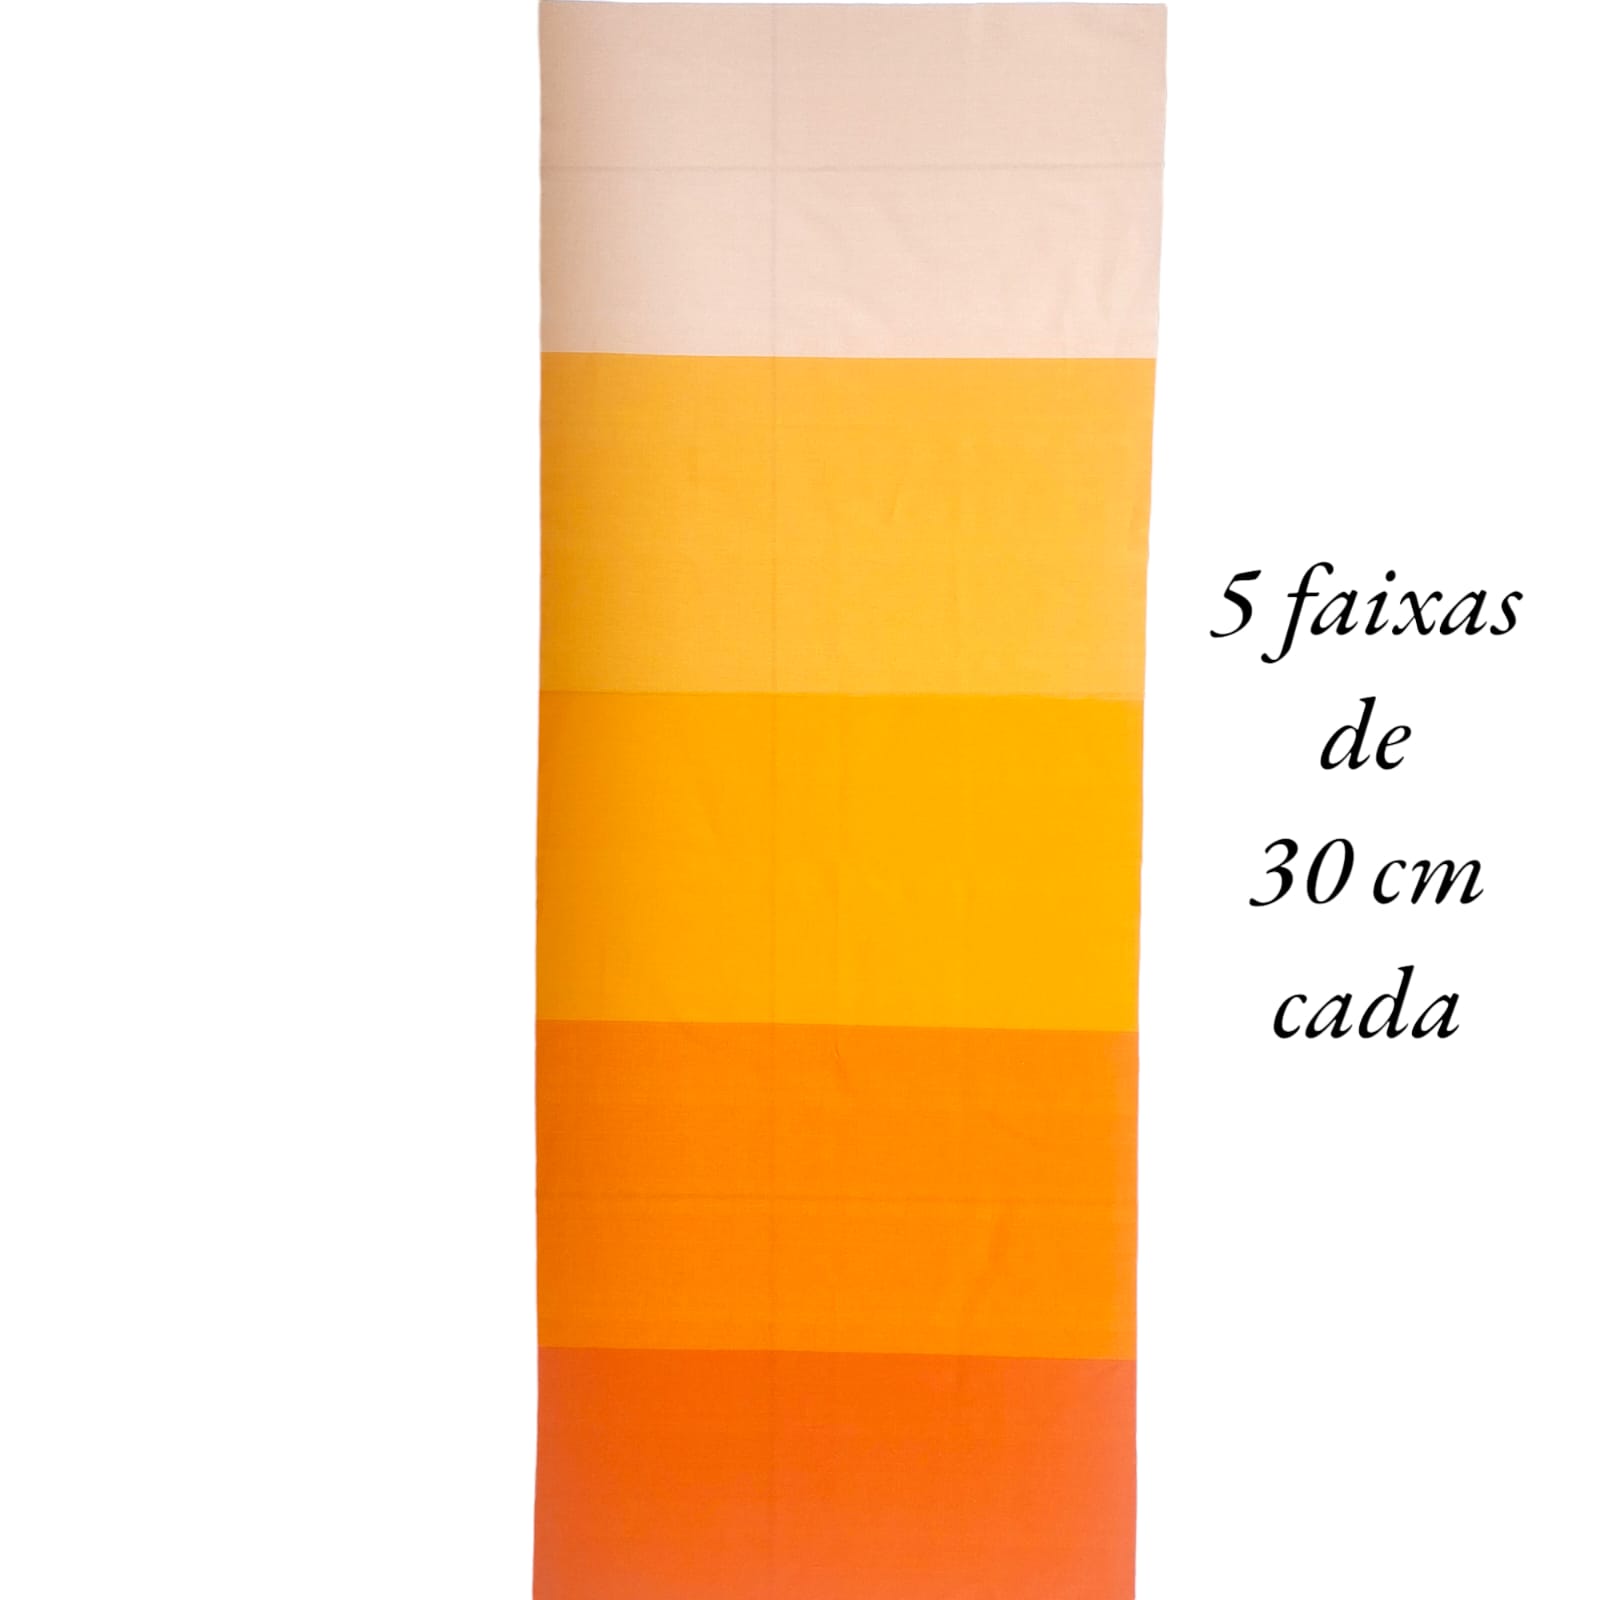 Tecido Tricoline digital - textura laranja degradê - Col. Basics for All - Fernando Maluhy  (50x1,50 cm)                              